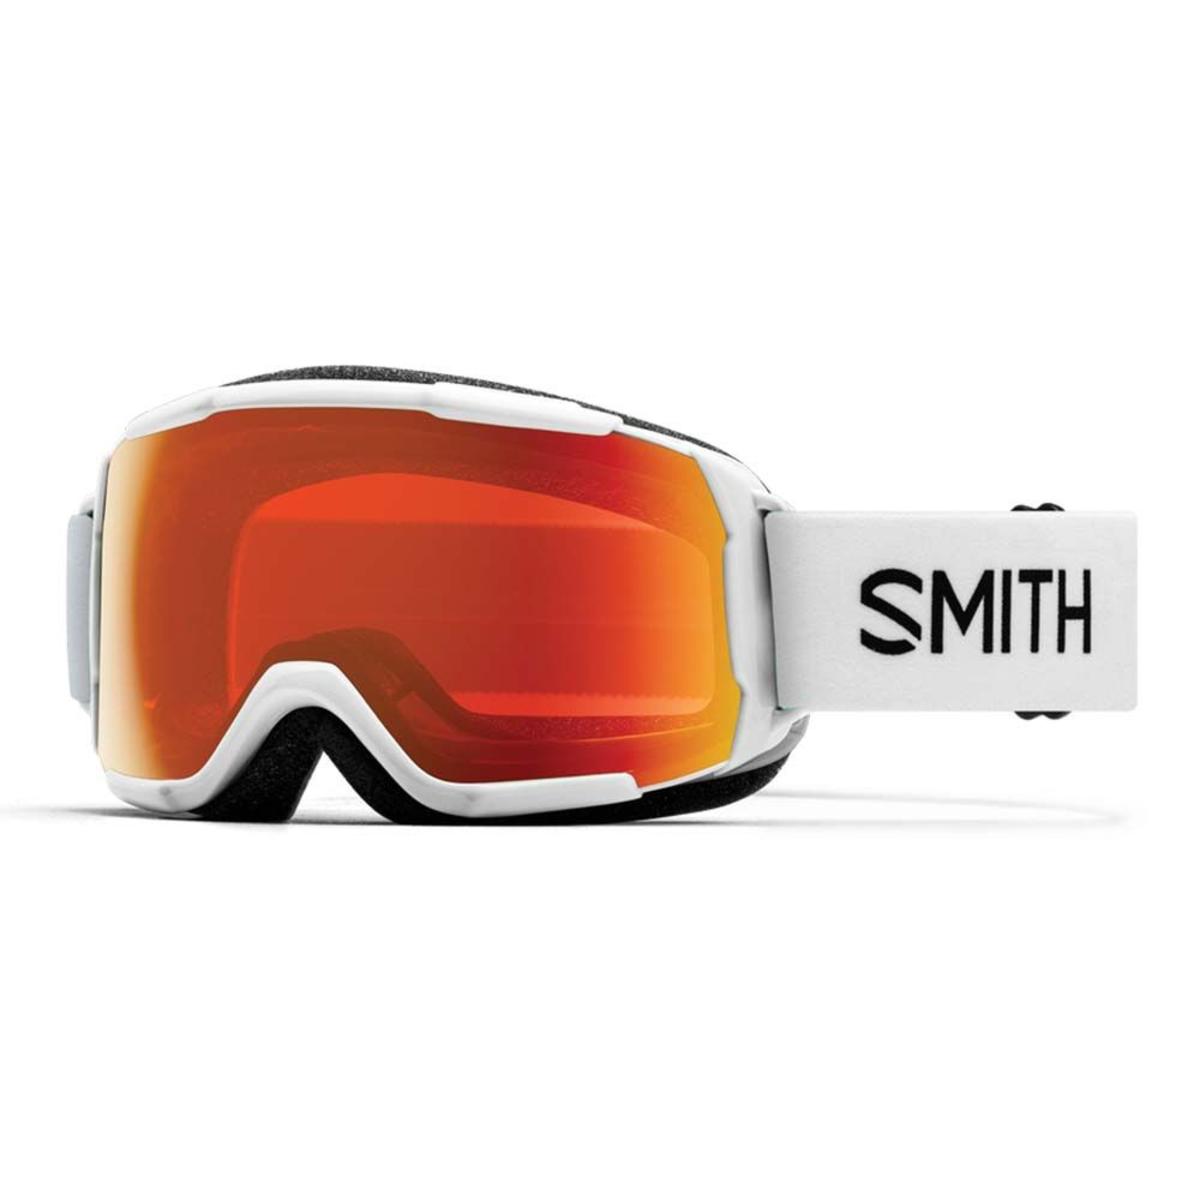 Smith Optics Grom Junior Goggles Chromapop Everyday Red Mirror - White Frame